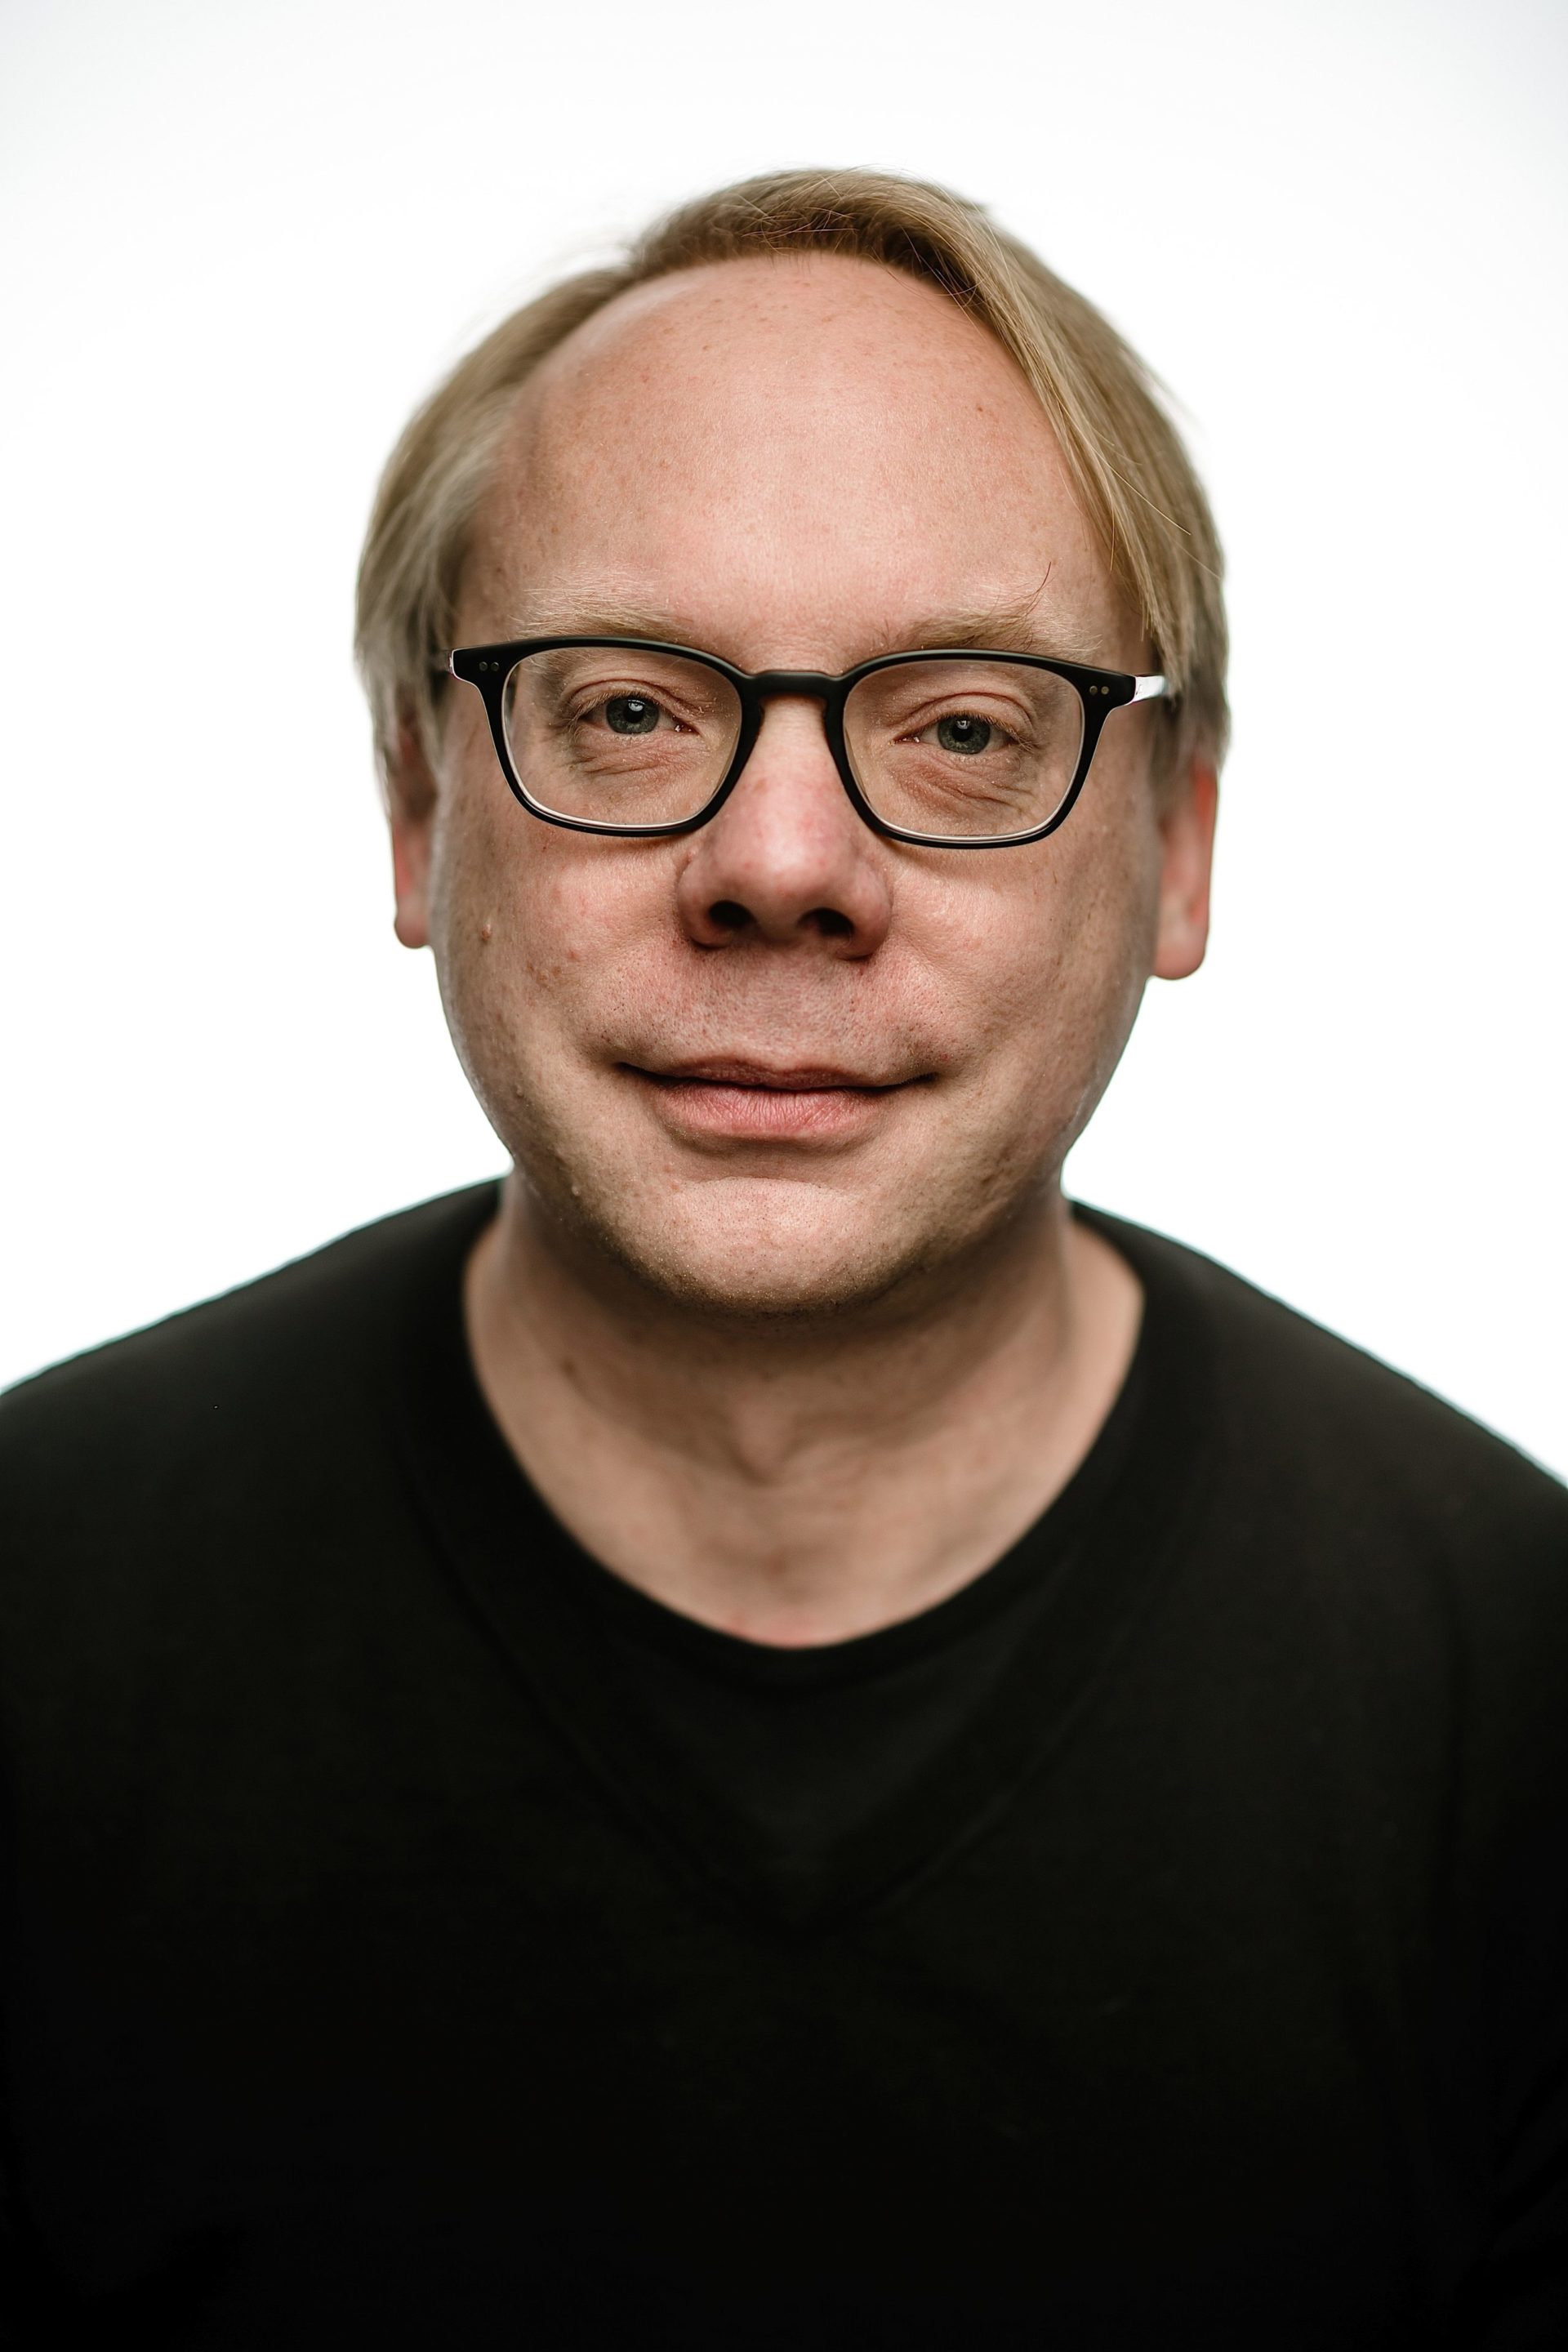 Christian Herrendorf